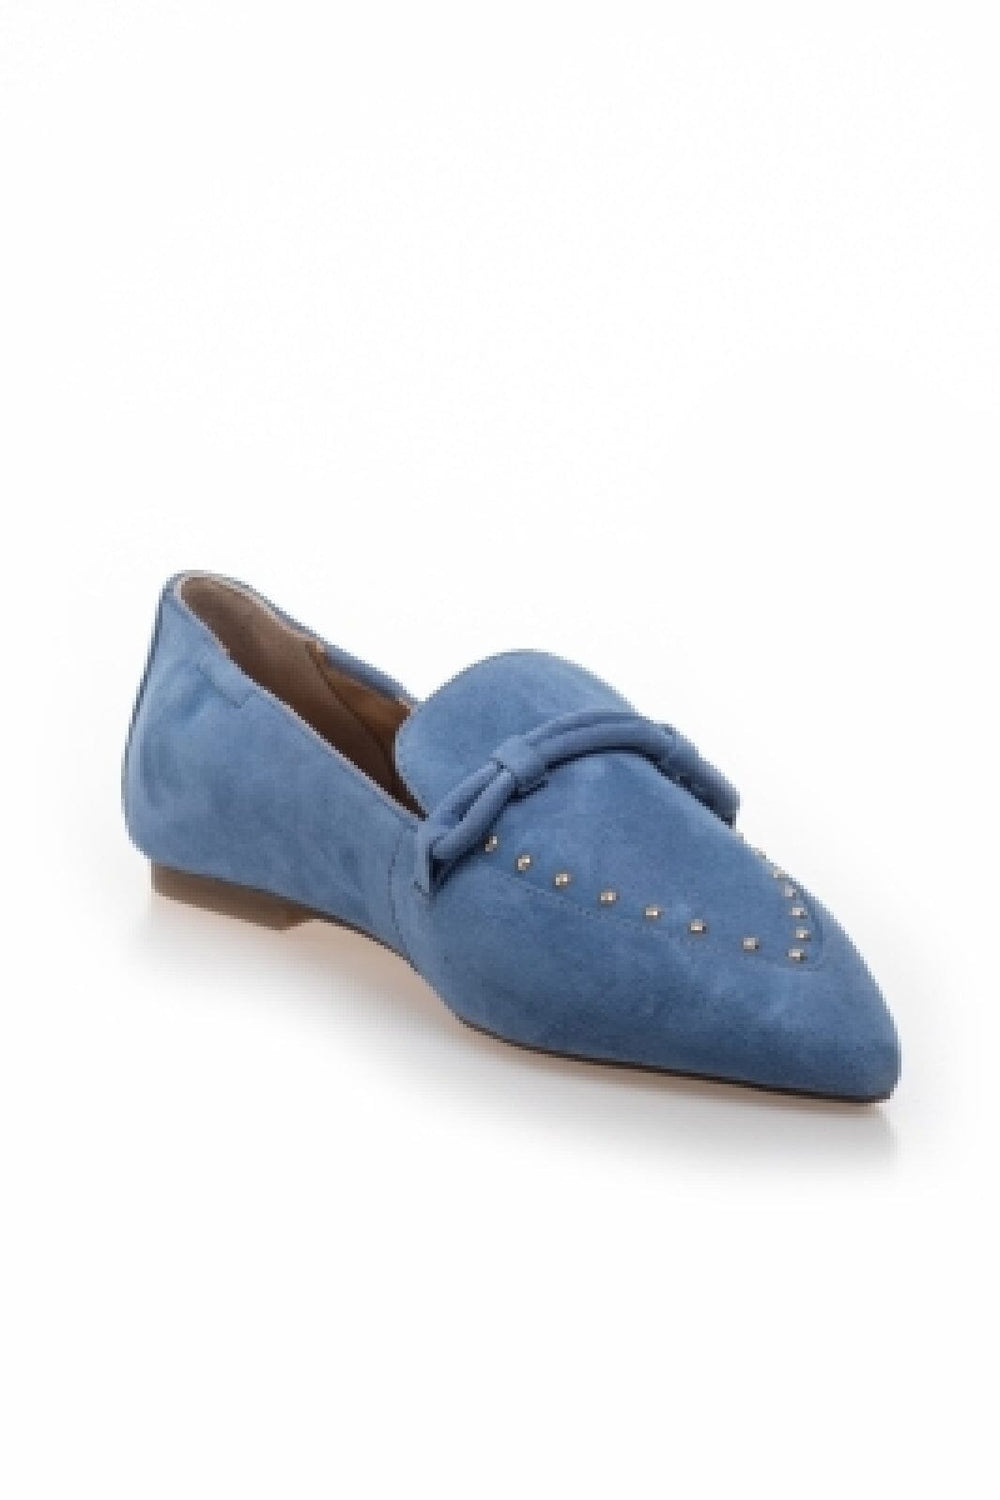 Forudbestilling - Copenhagen Shoes - Be You - Suede - 0220 Denim - Februar/Marts Ballerinaer 